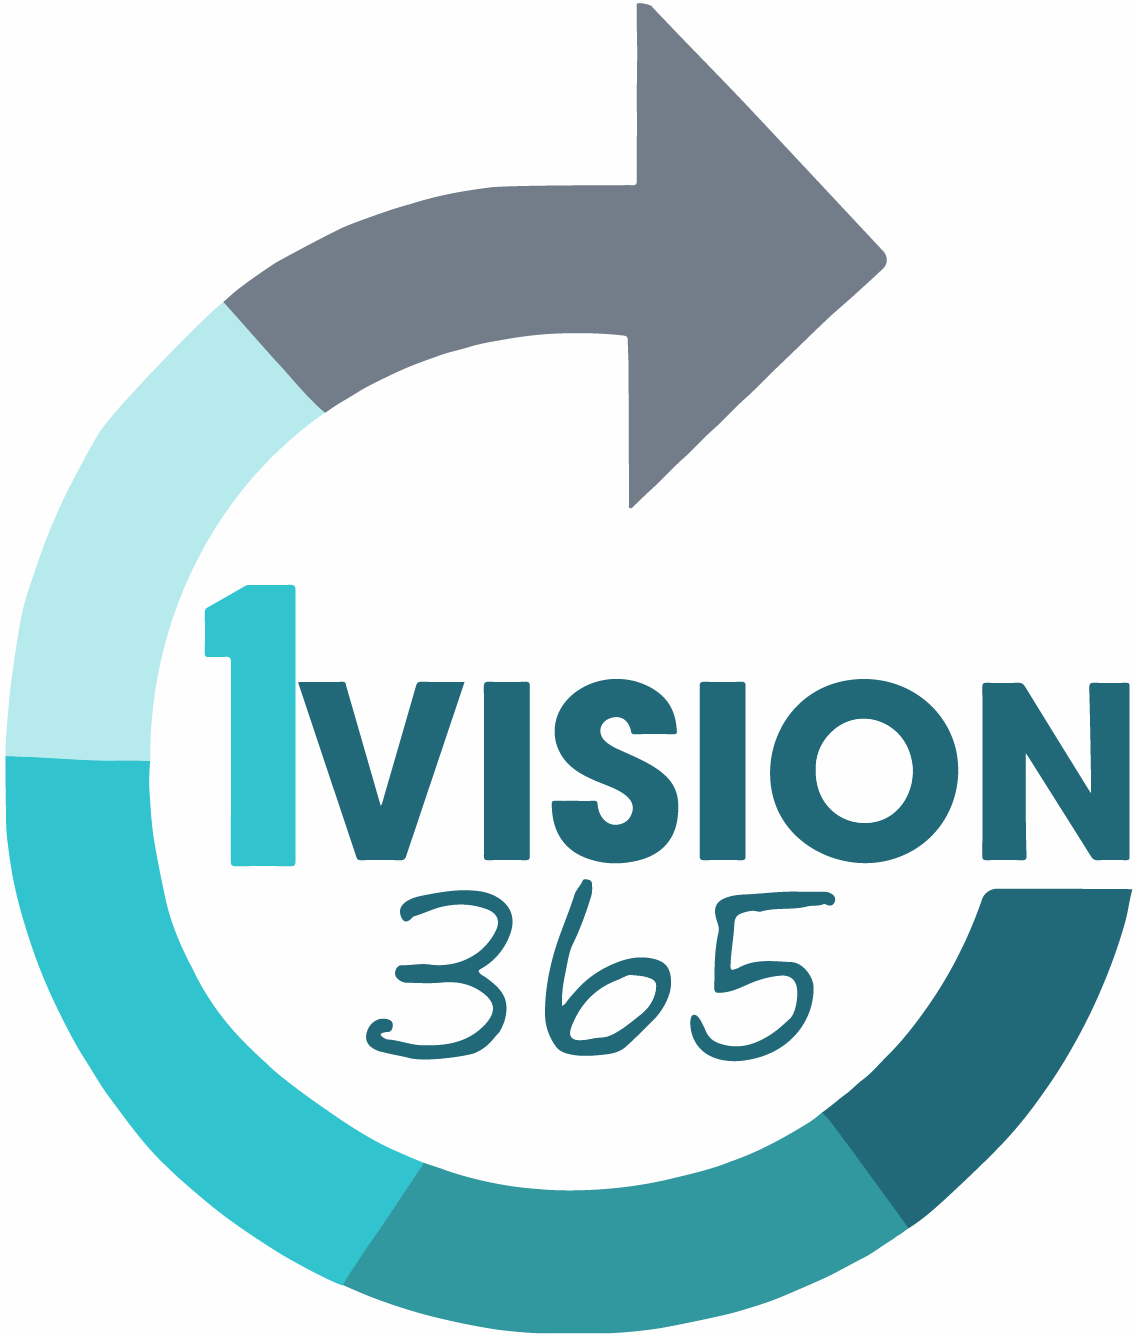 1Vision365 AL Helper